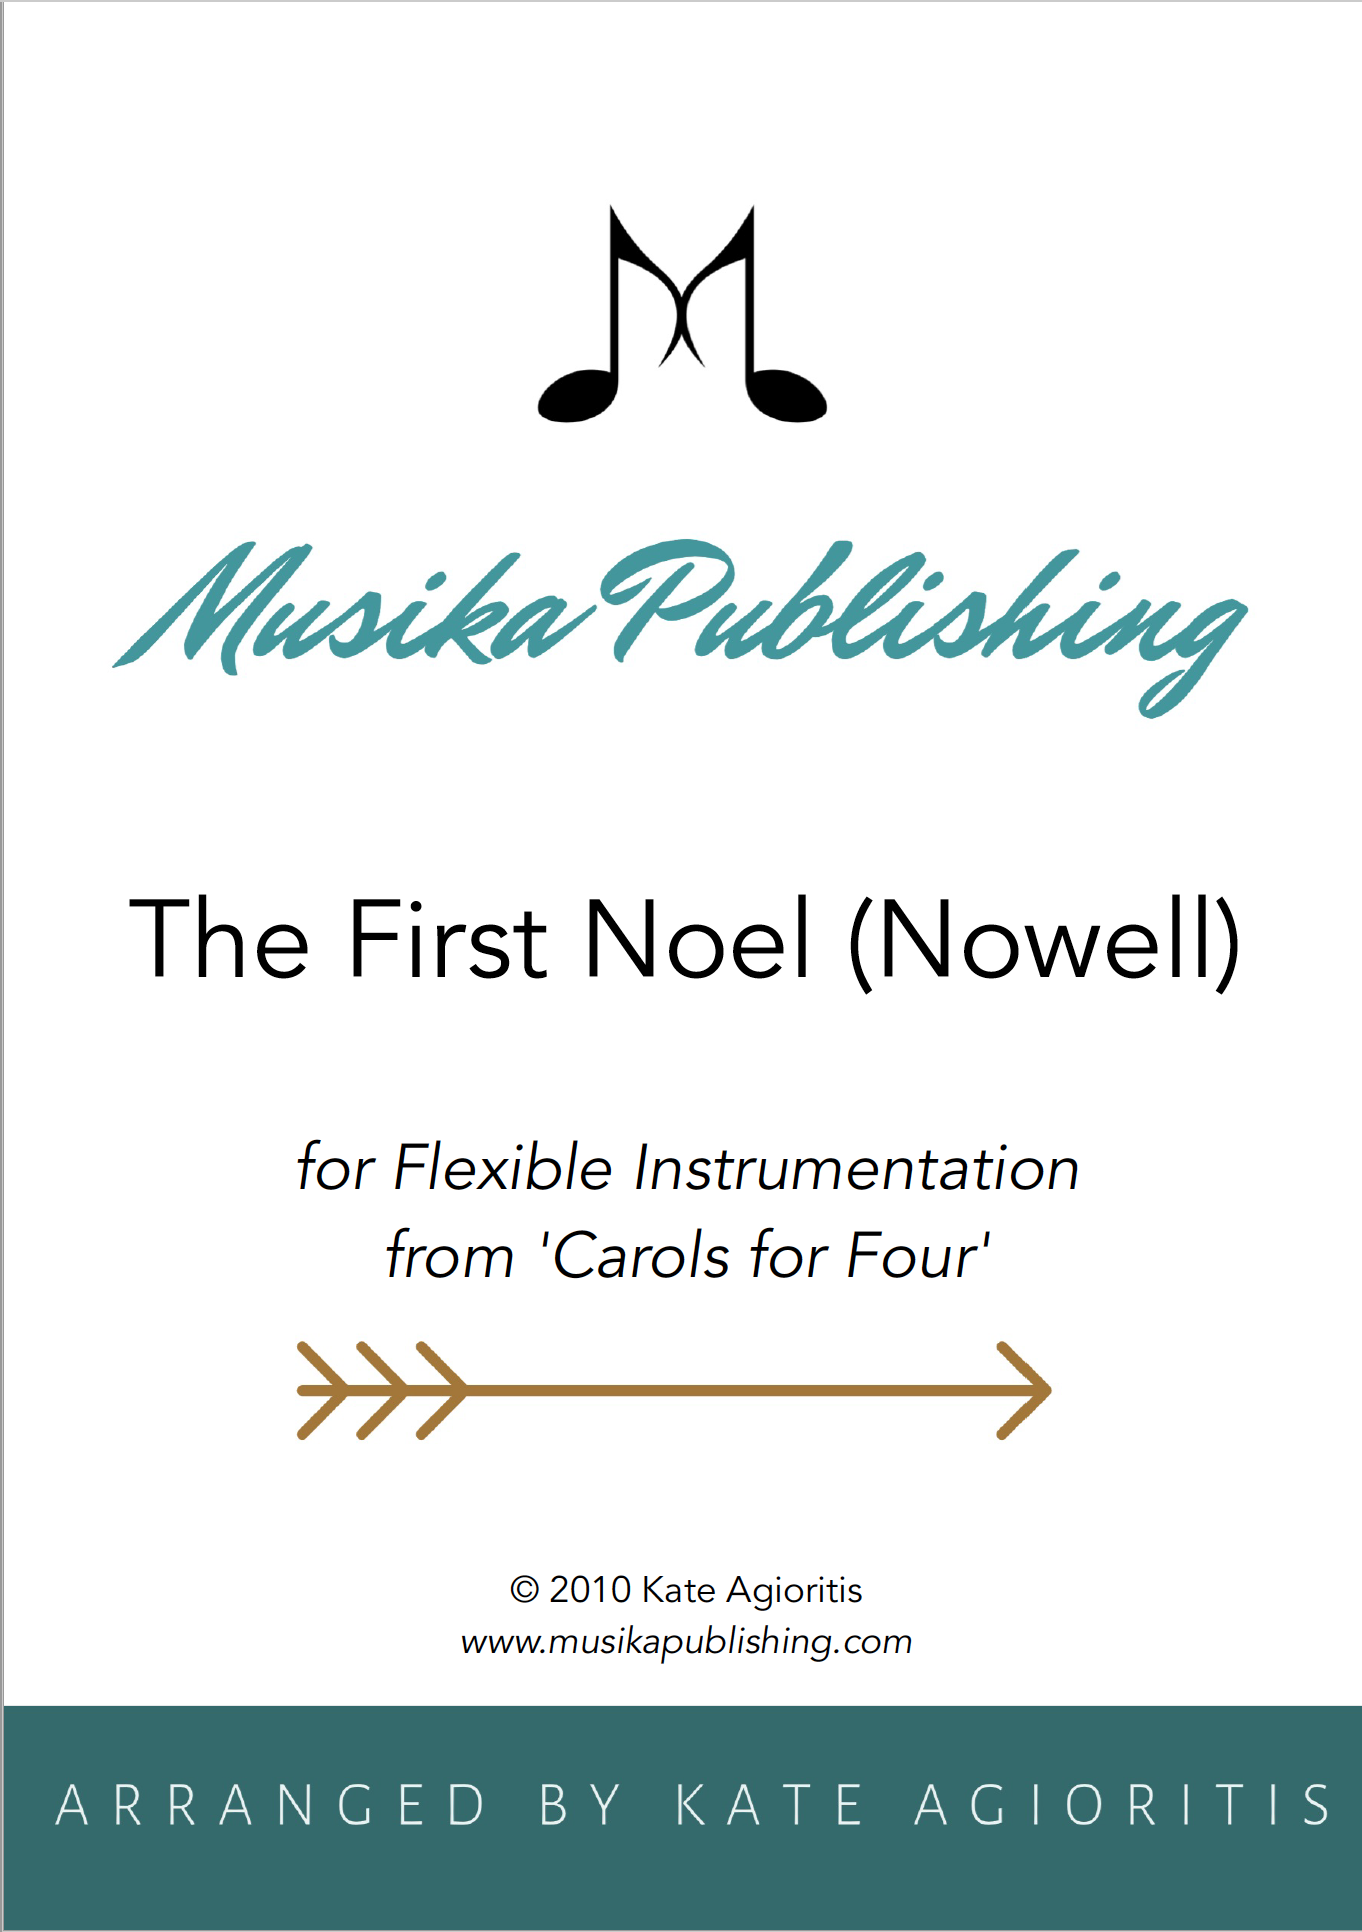 The First Noel (Nowell) – Flexible Instrumentation